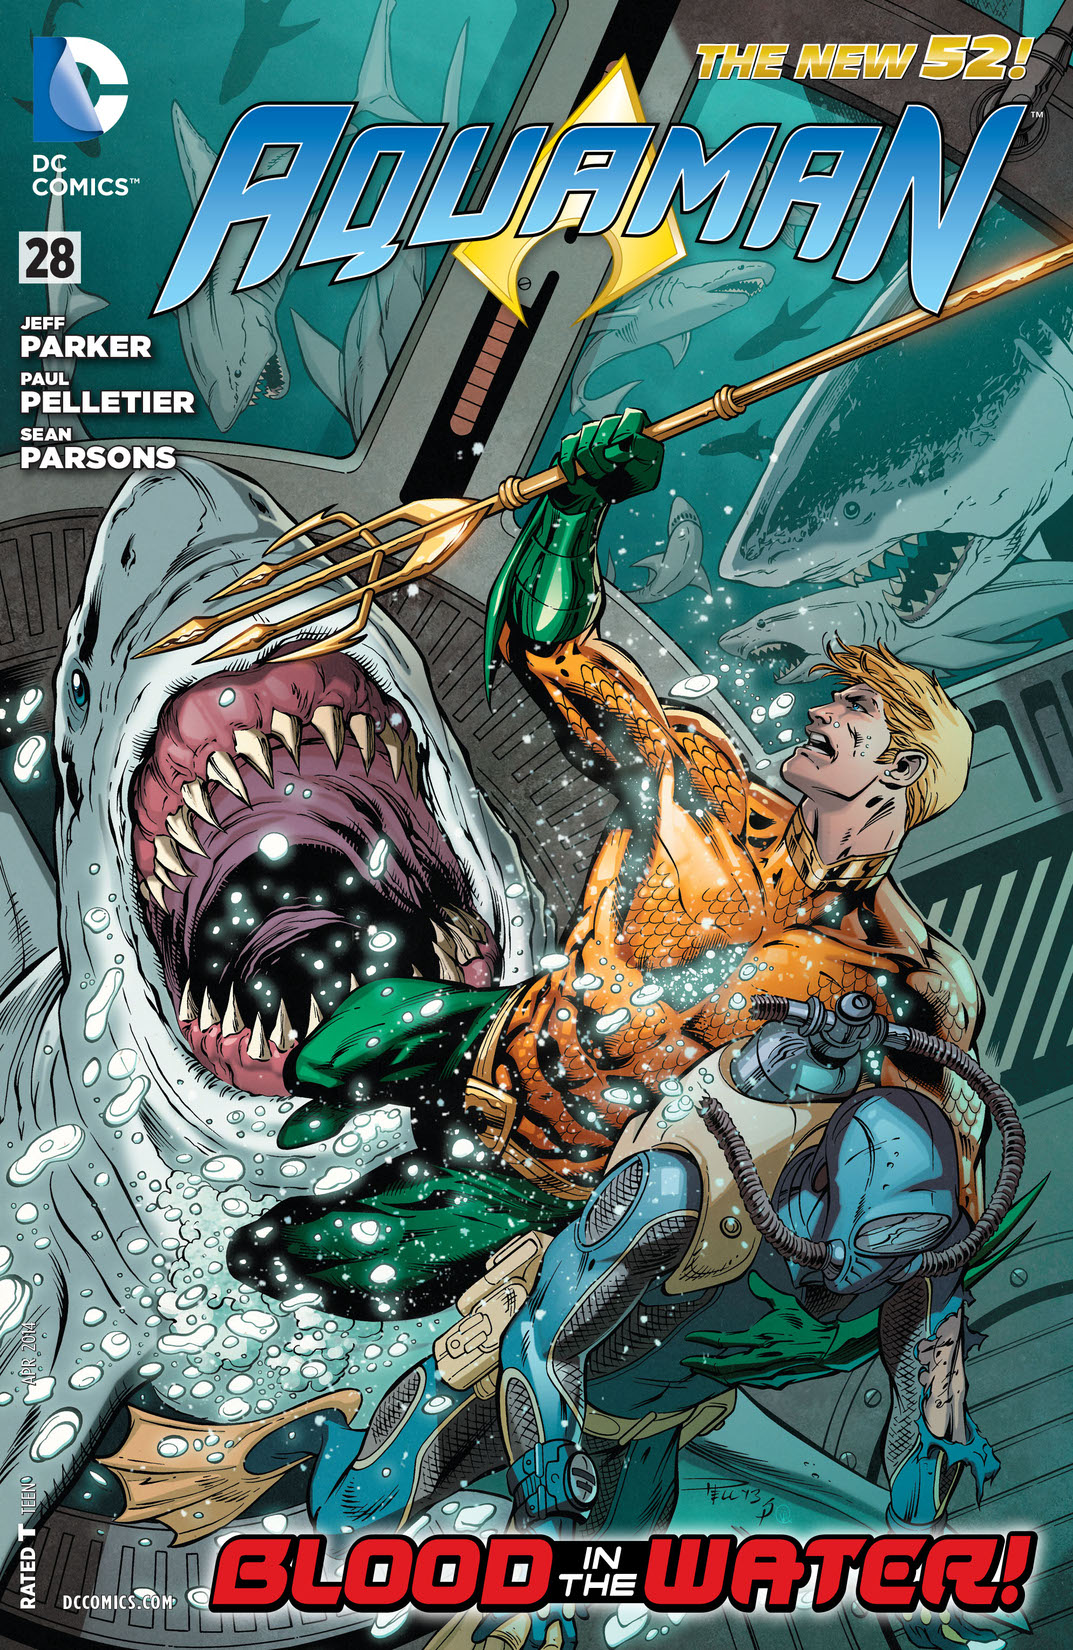 Aquaman (2011-) #28 preview images